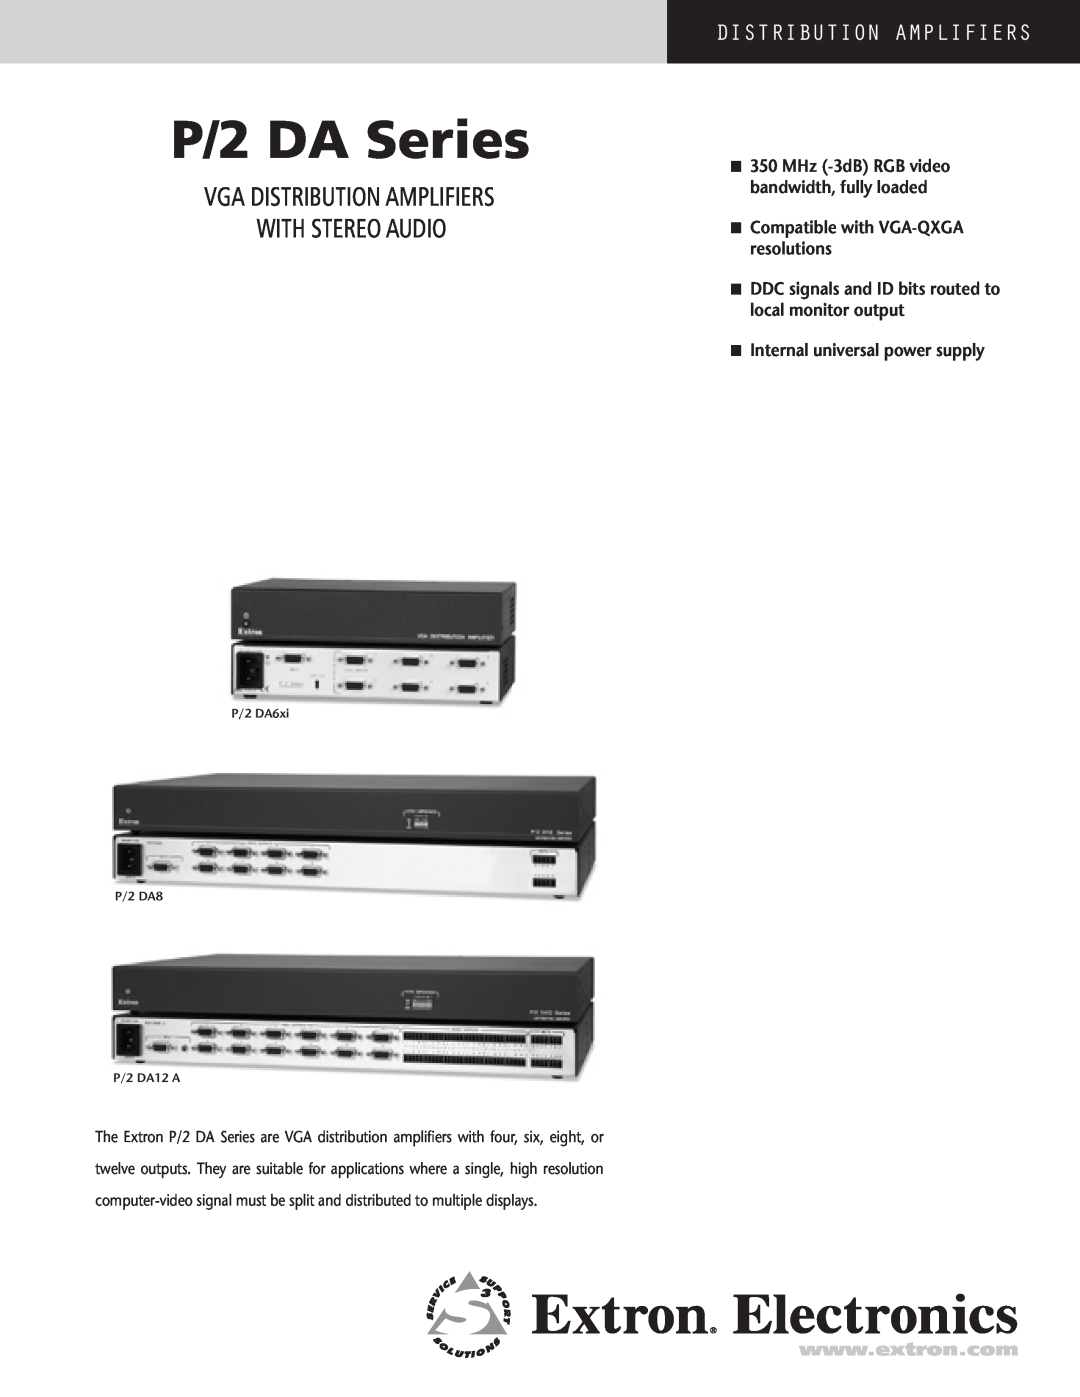 Extron electronic manual vga distribution amplifiers with stereo audio, P/2 DA Series, nInternal universal power supply 